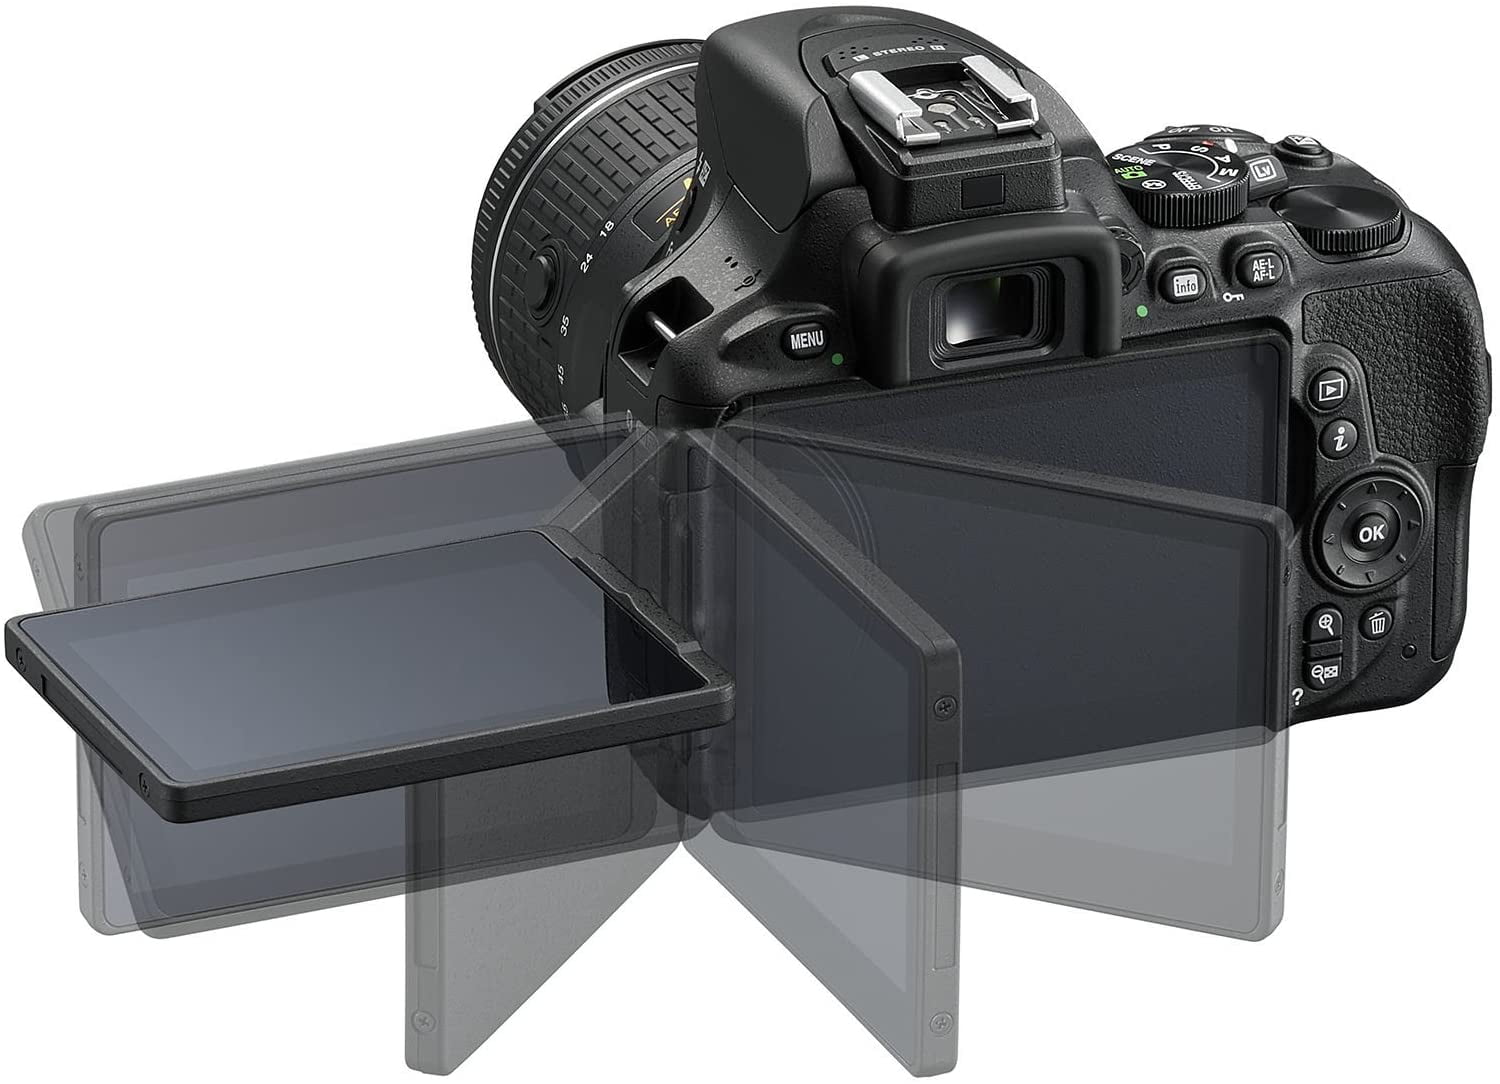 Nikon D5600 DSLR Camera with 18-55mm VR Lens + 64GB SDXC Memory Card,  Tripod, Flash, and More 